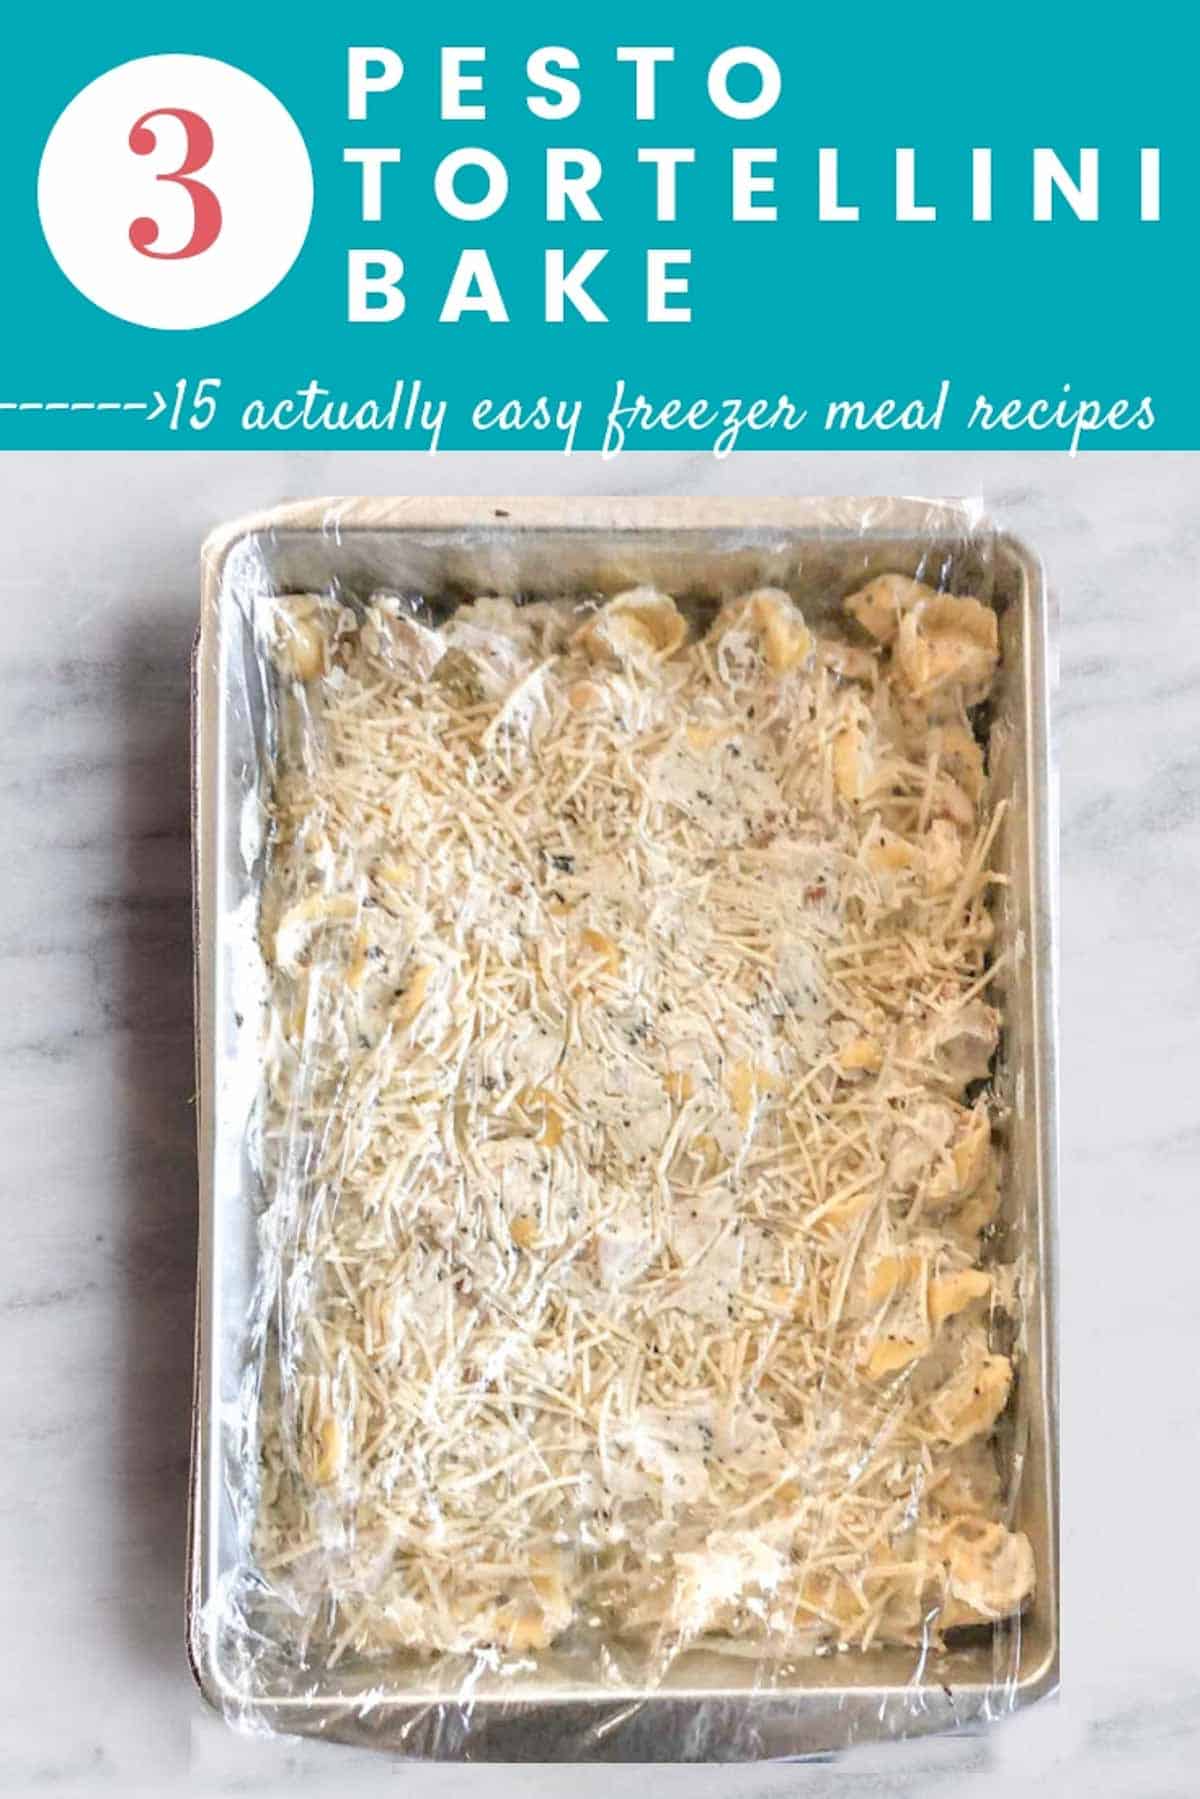 Easy Freezer Meals: Pesto Tortellini Bake in a metal pan